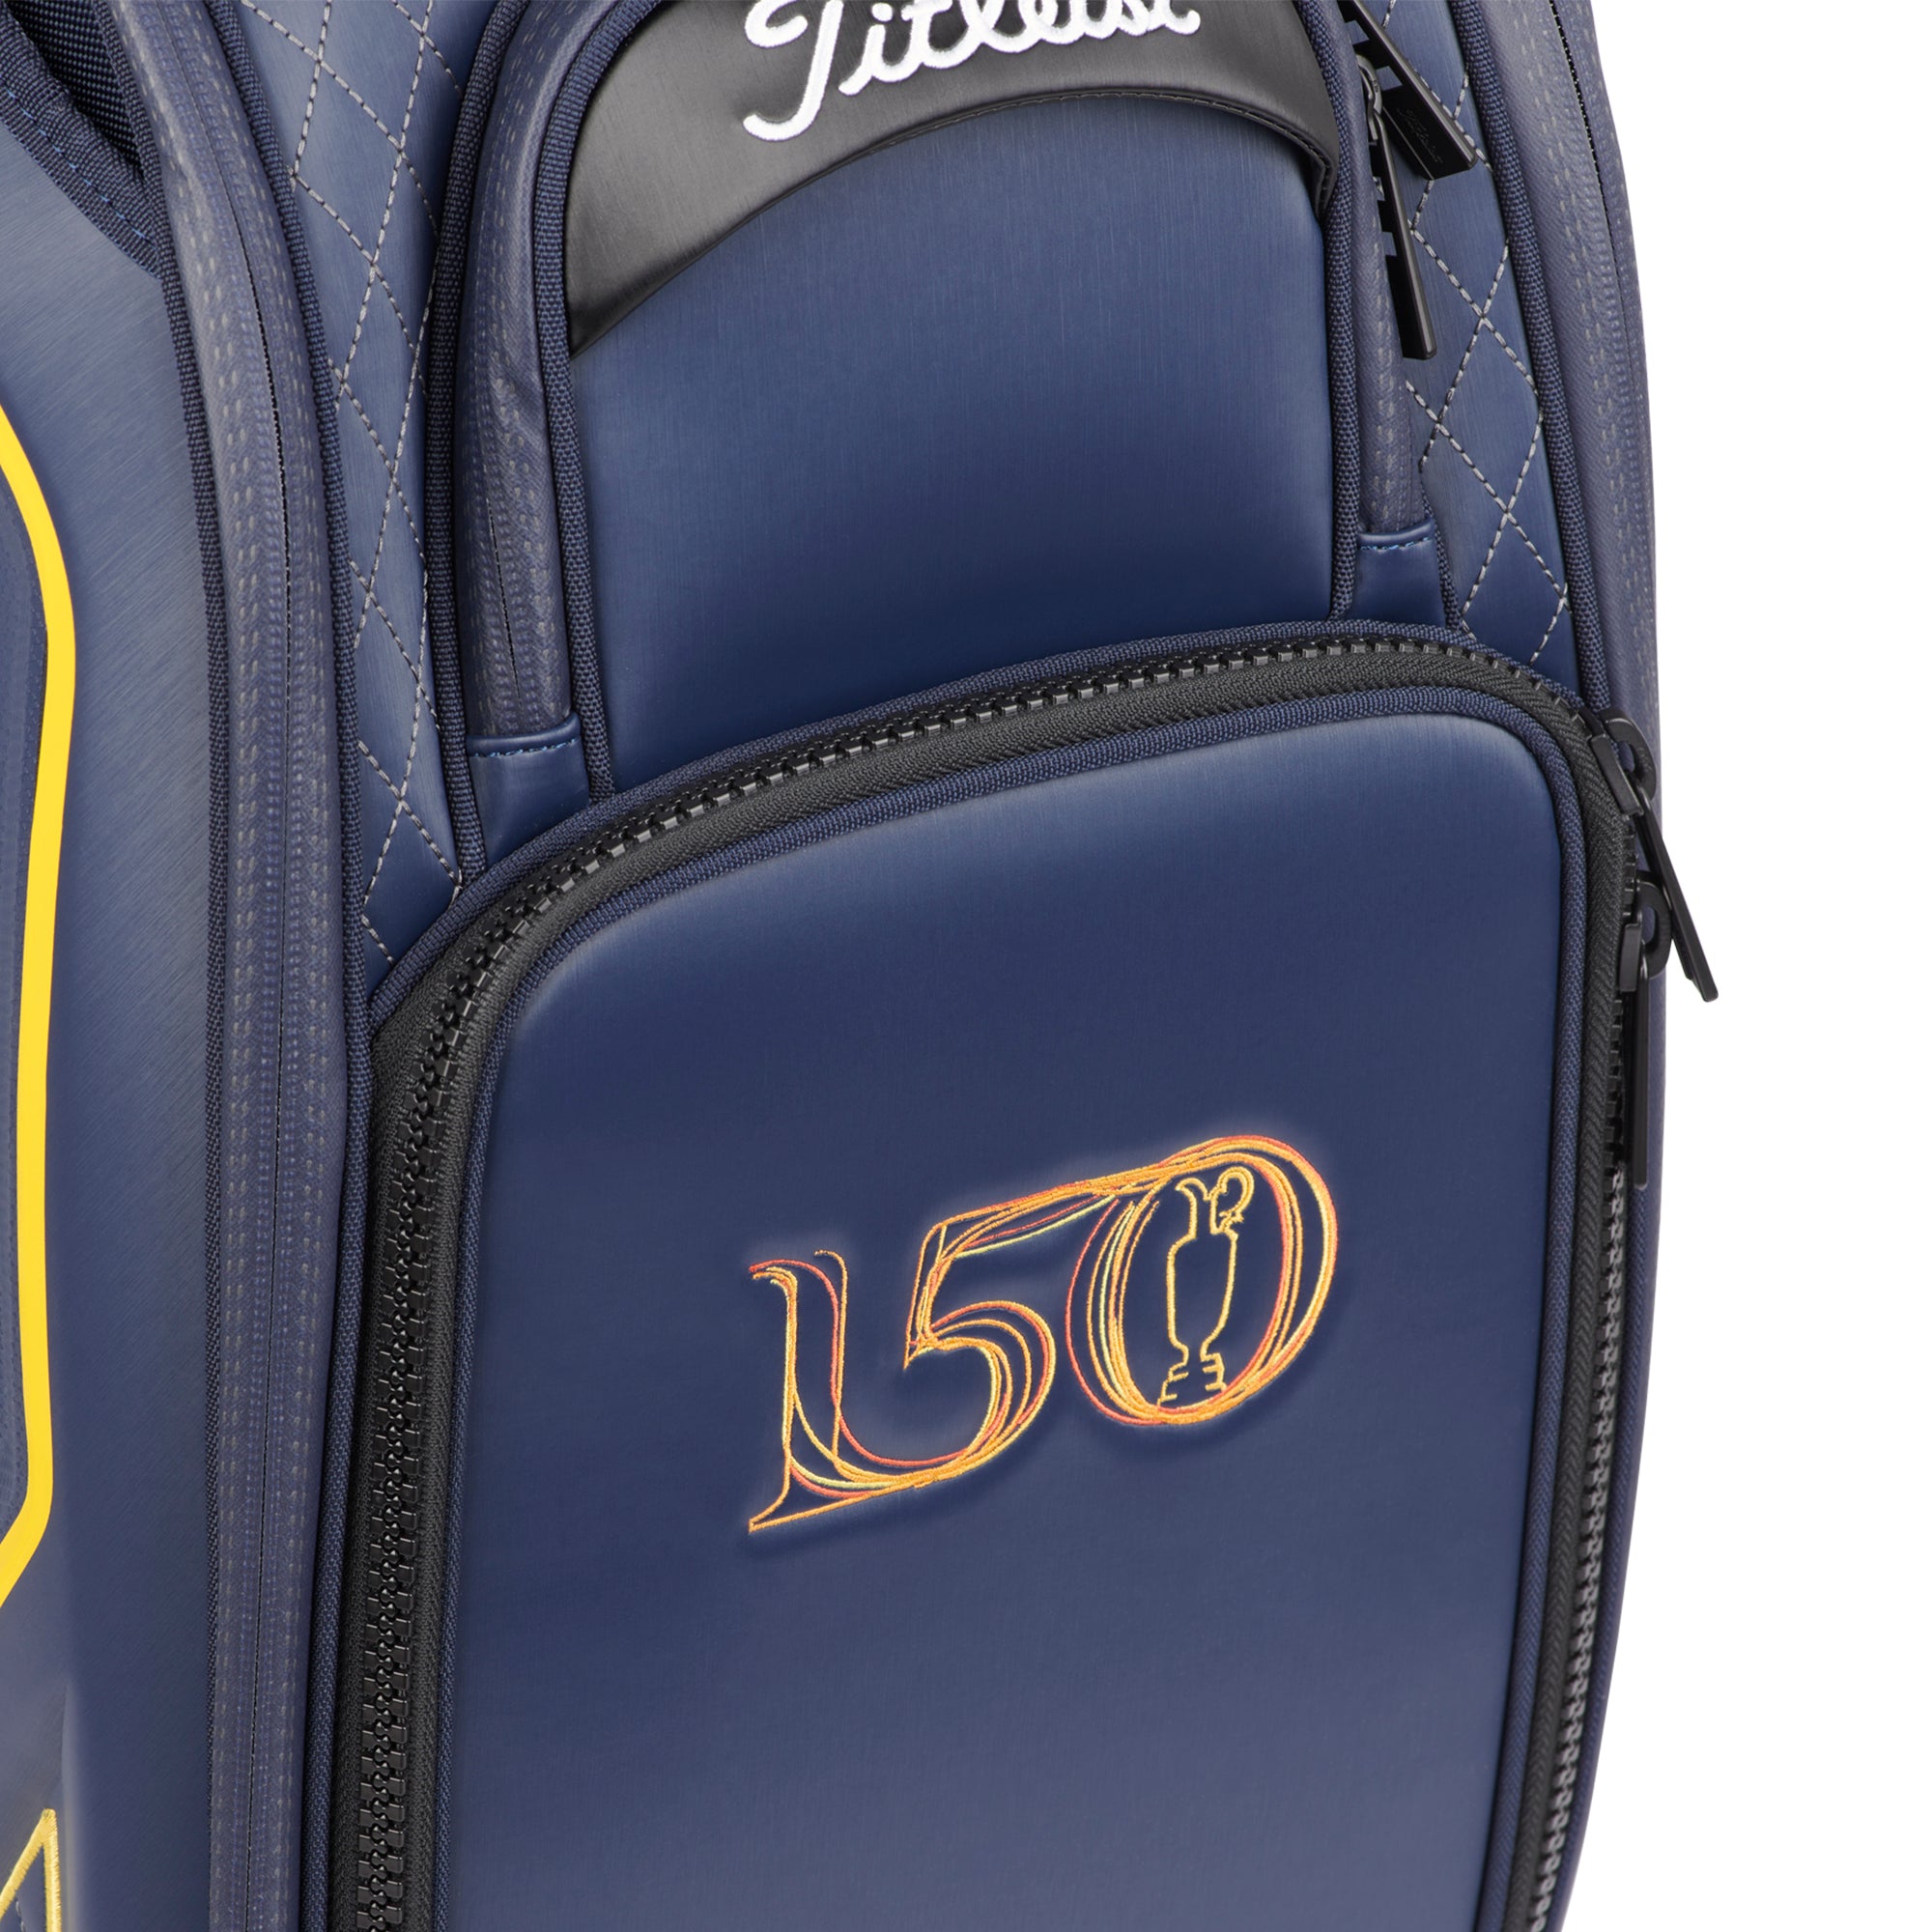 Titleist 150th Open Tour Bag